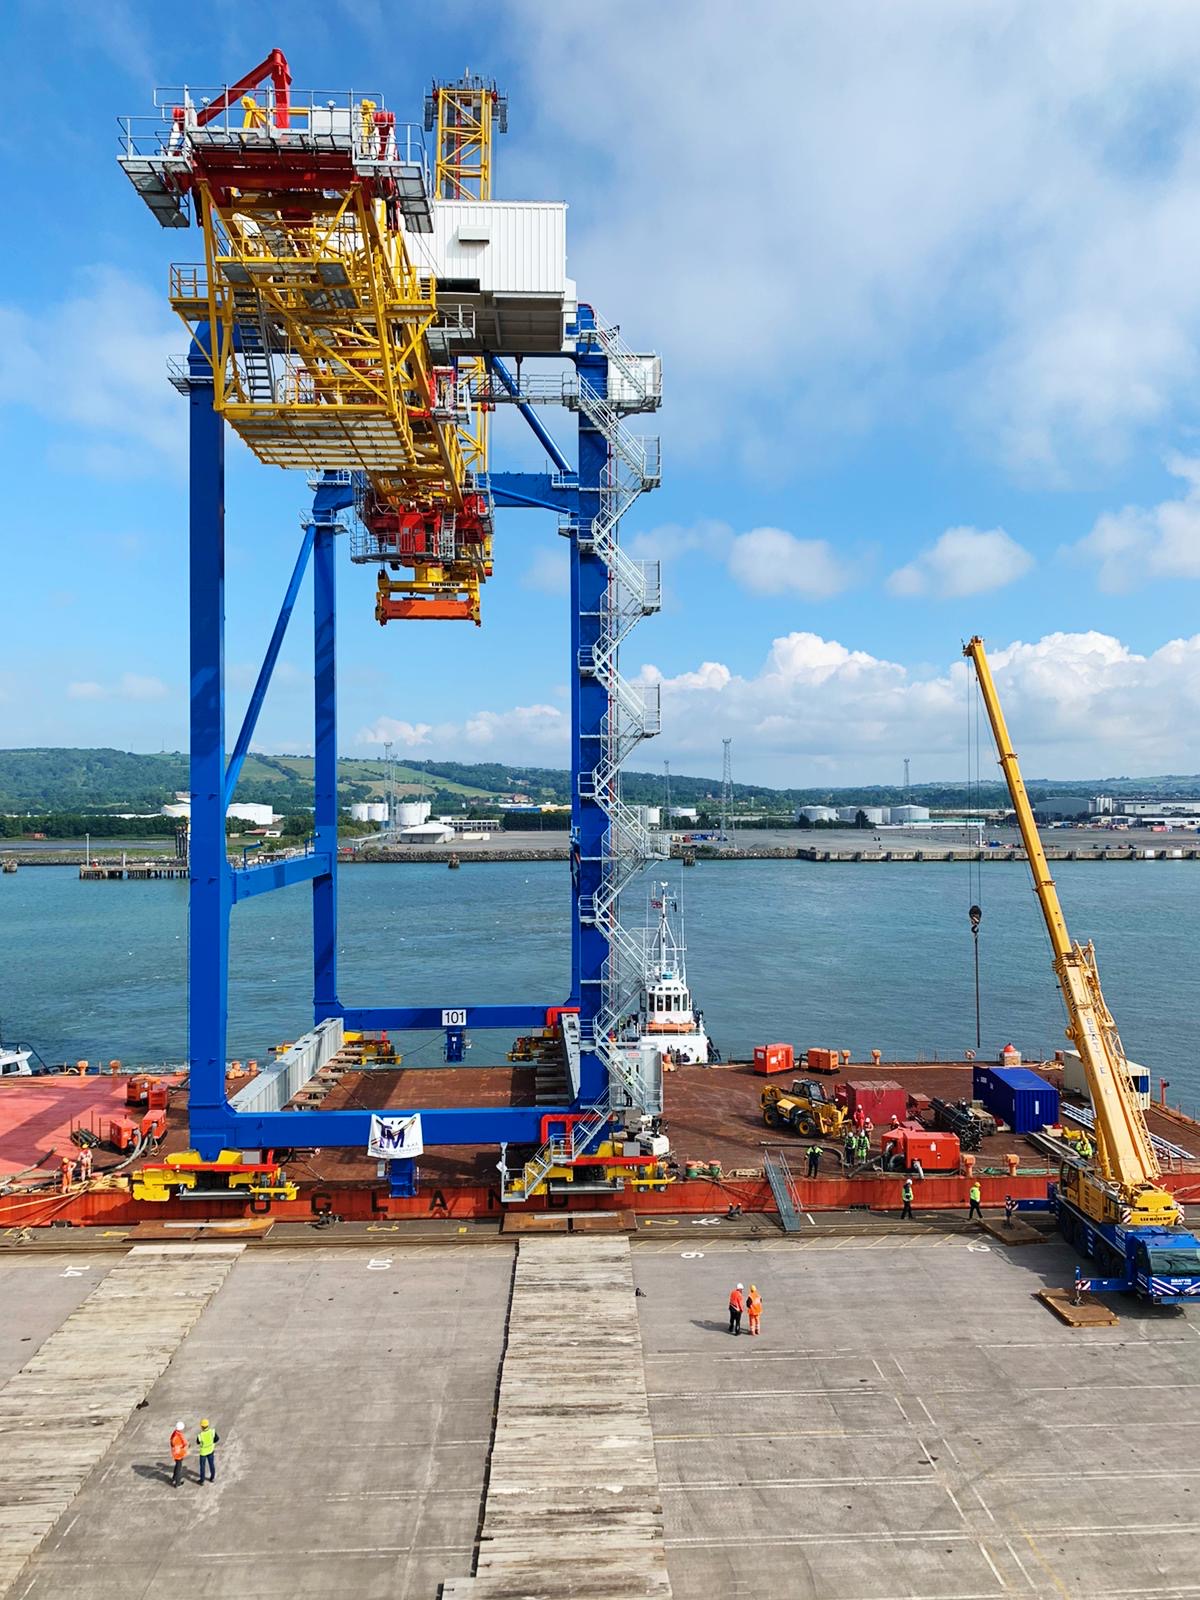 New Crane Gives Belfast Harbour a Lift